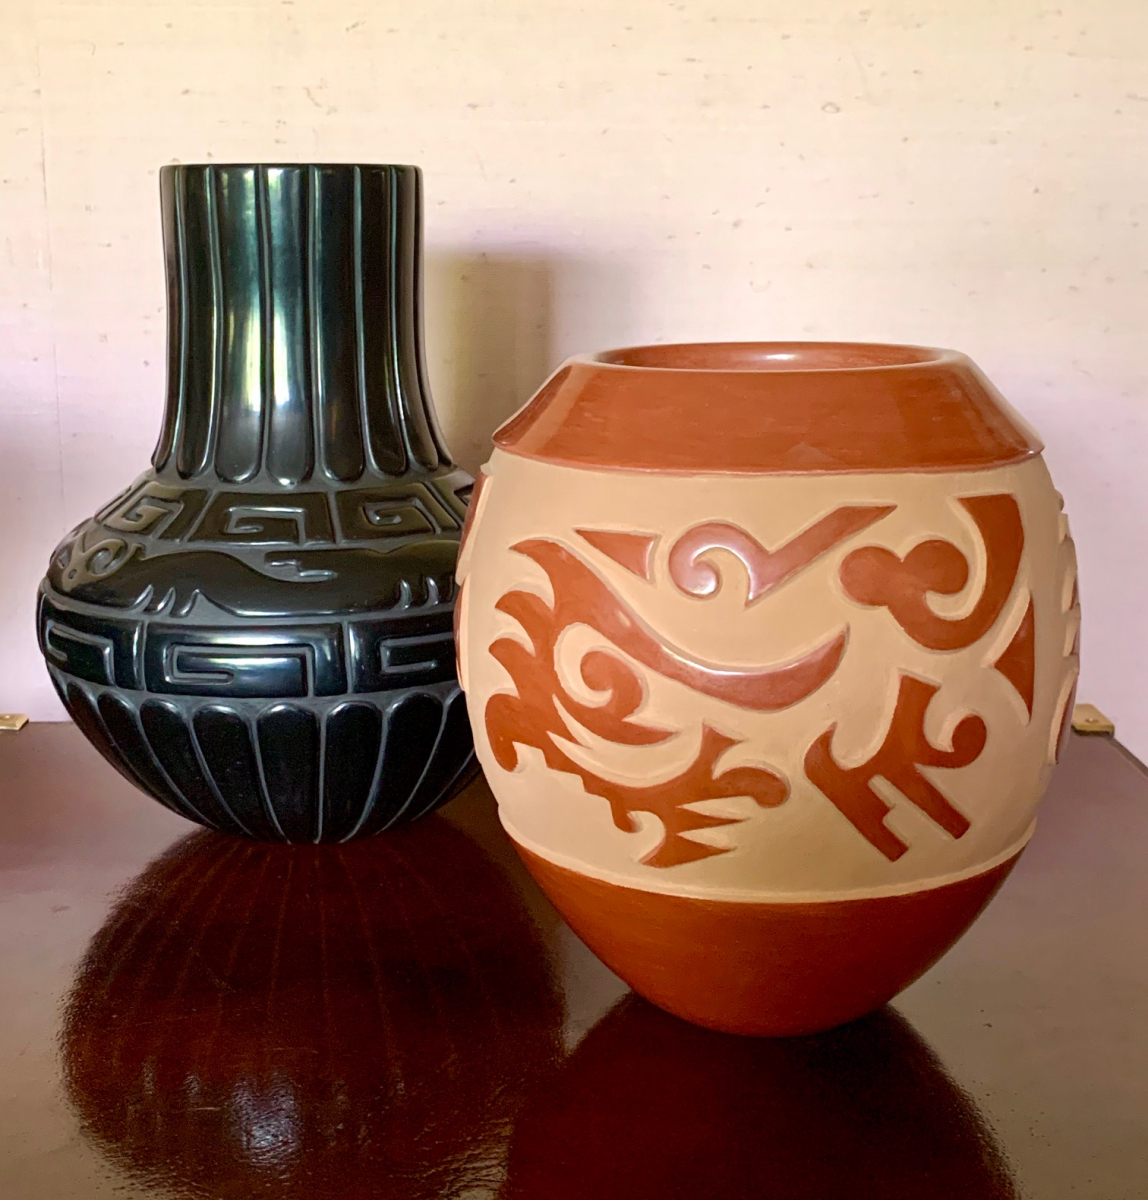 Black Avanyu Vase by Linda Tafoya Sanchez.  Reverse Redware Vase by James Ebelacker.